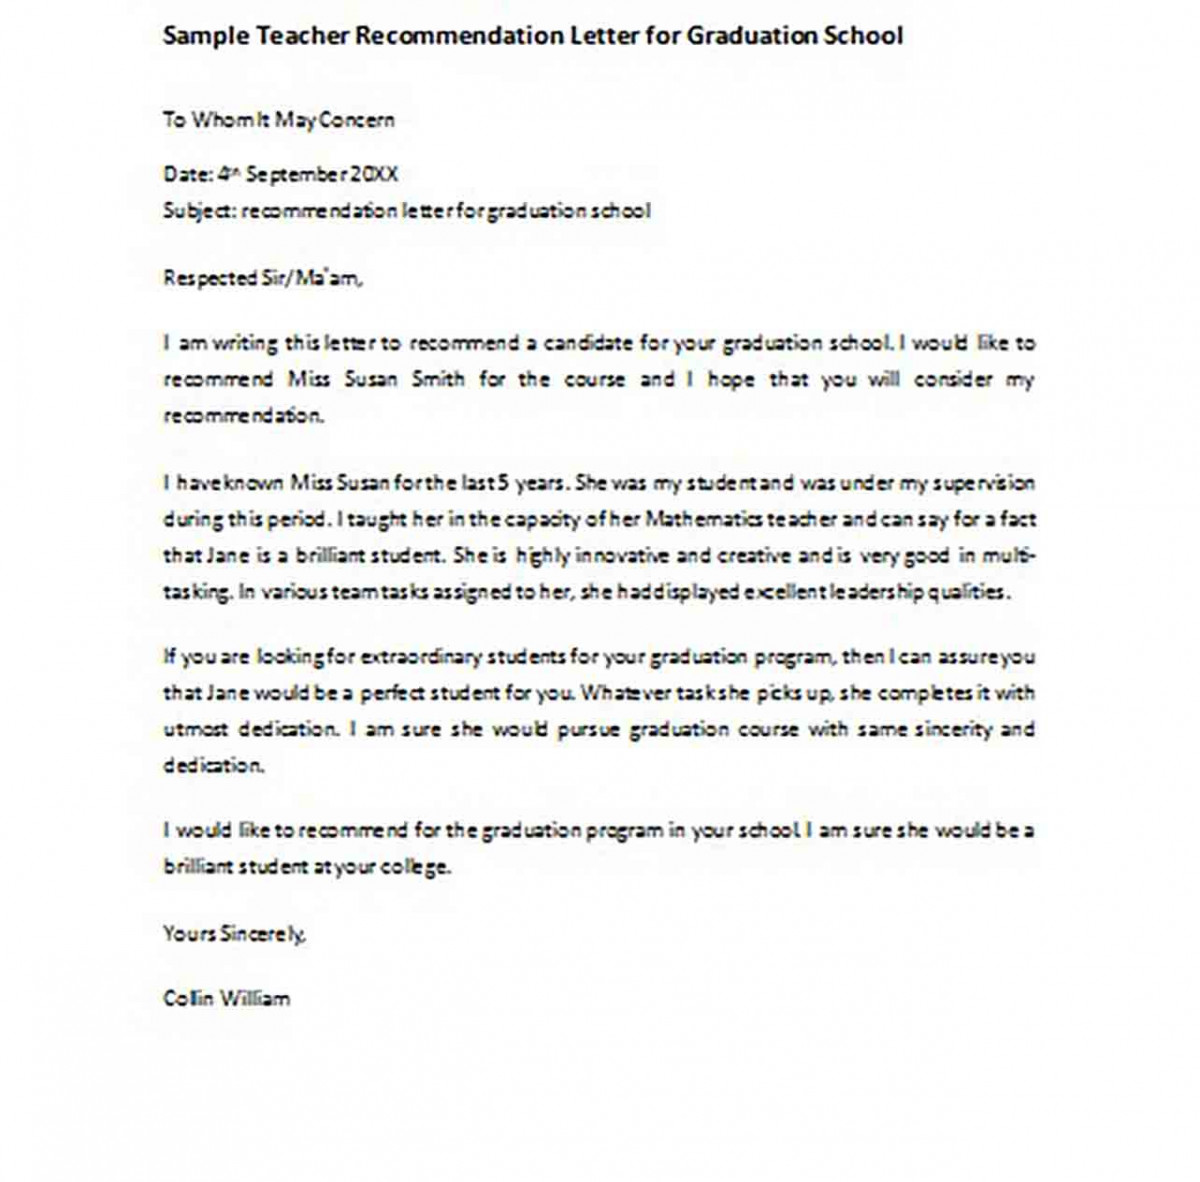 Sample Teacher Recommendation Letter for Graduation School